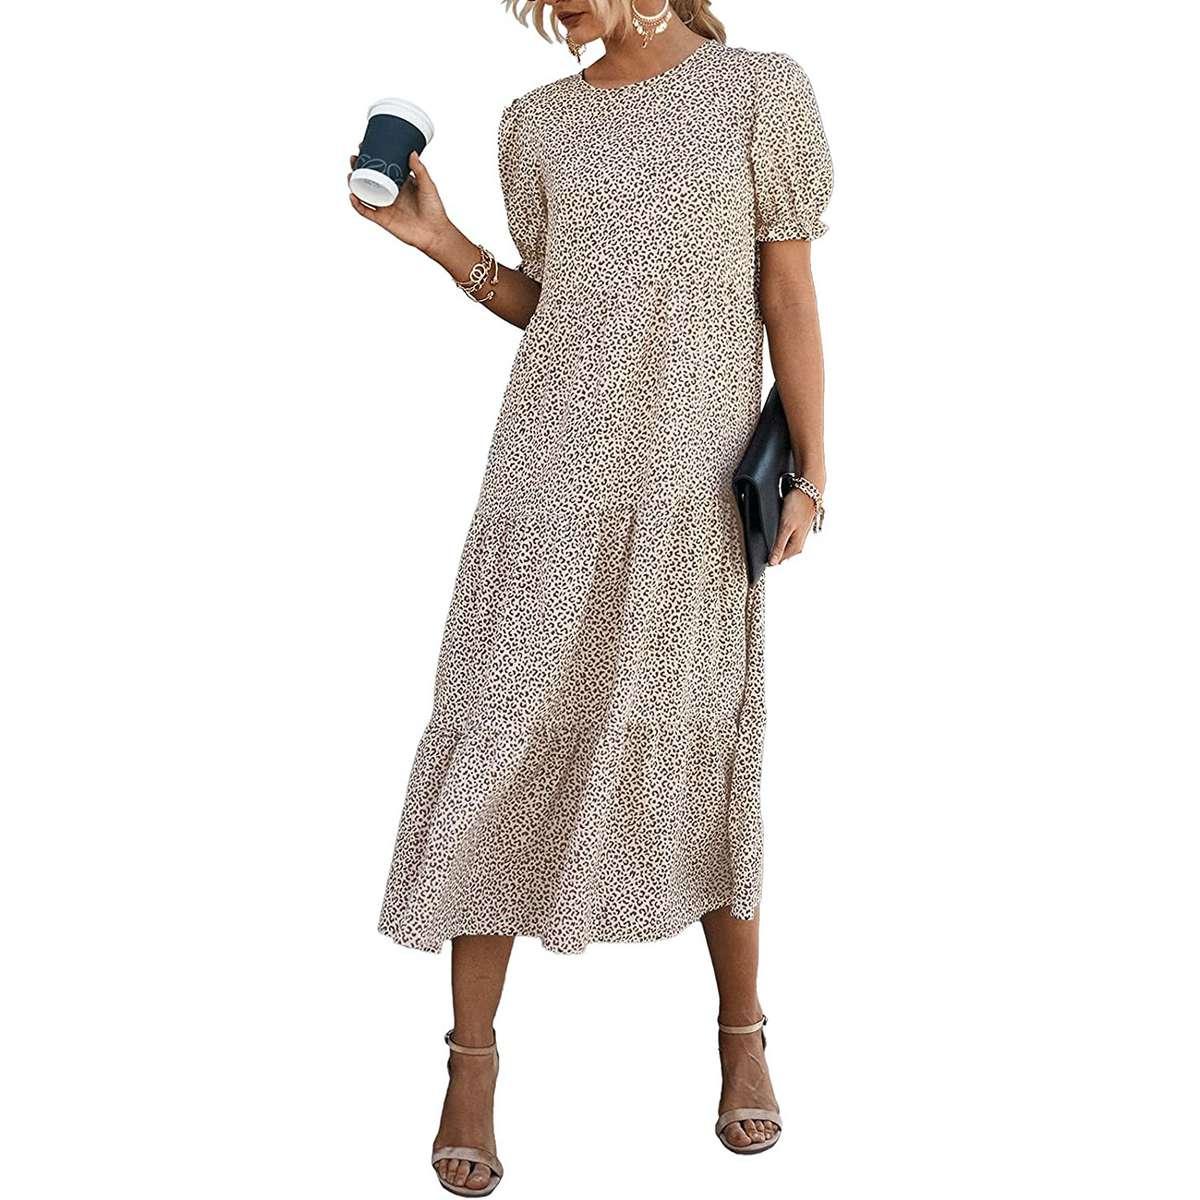 Amazon best selling dresses